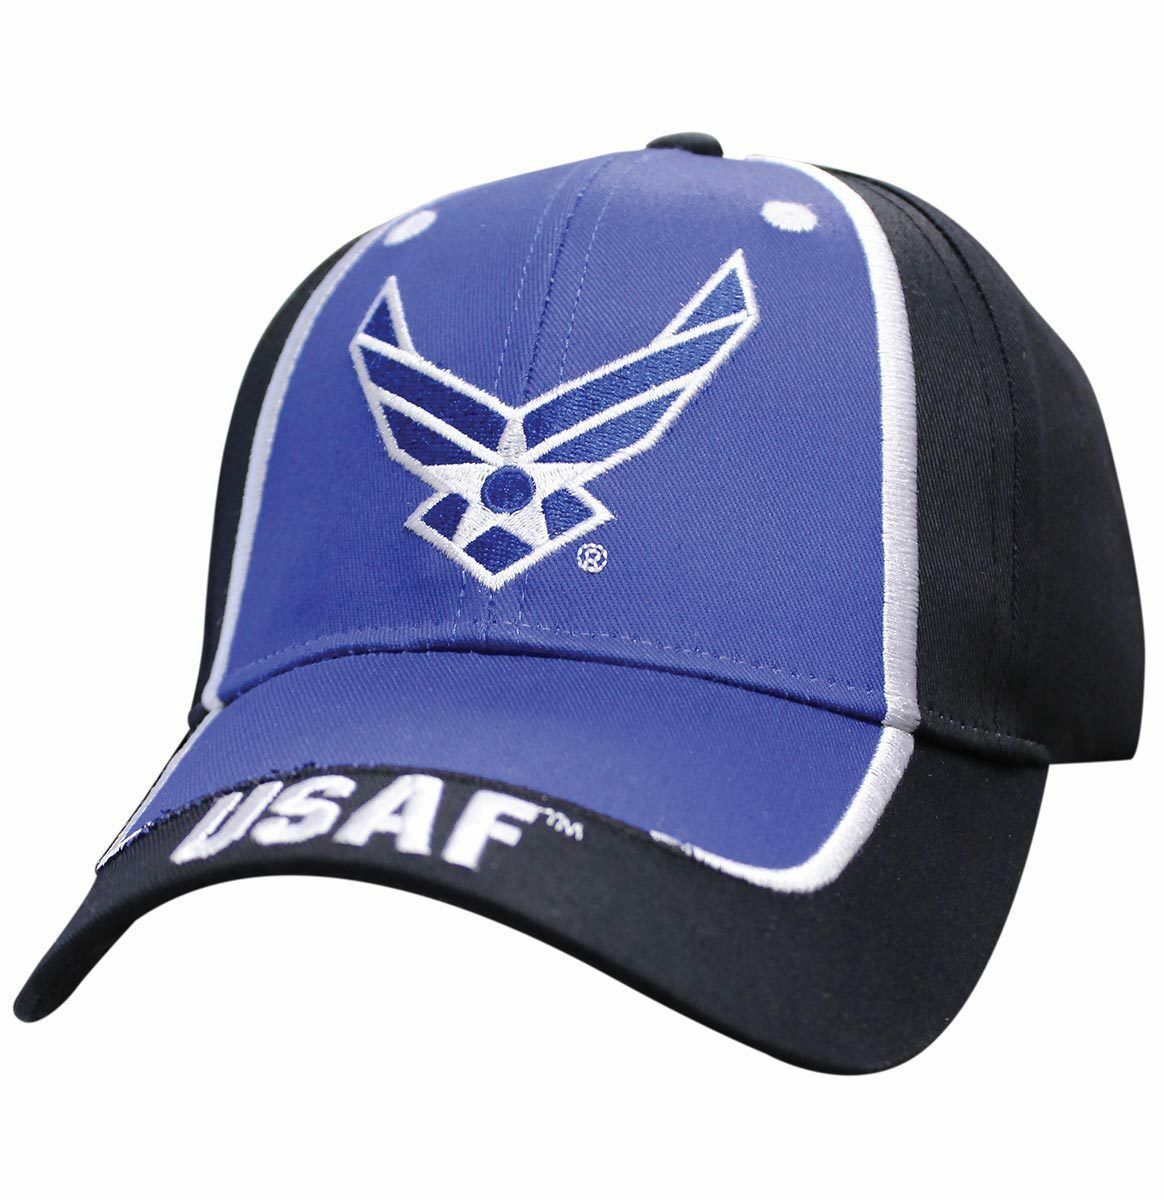 U.S. AIR FORCE USAF (BASE LINE) Military Baseball Cap (BLUE/BLACK) - Hats